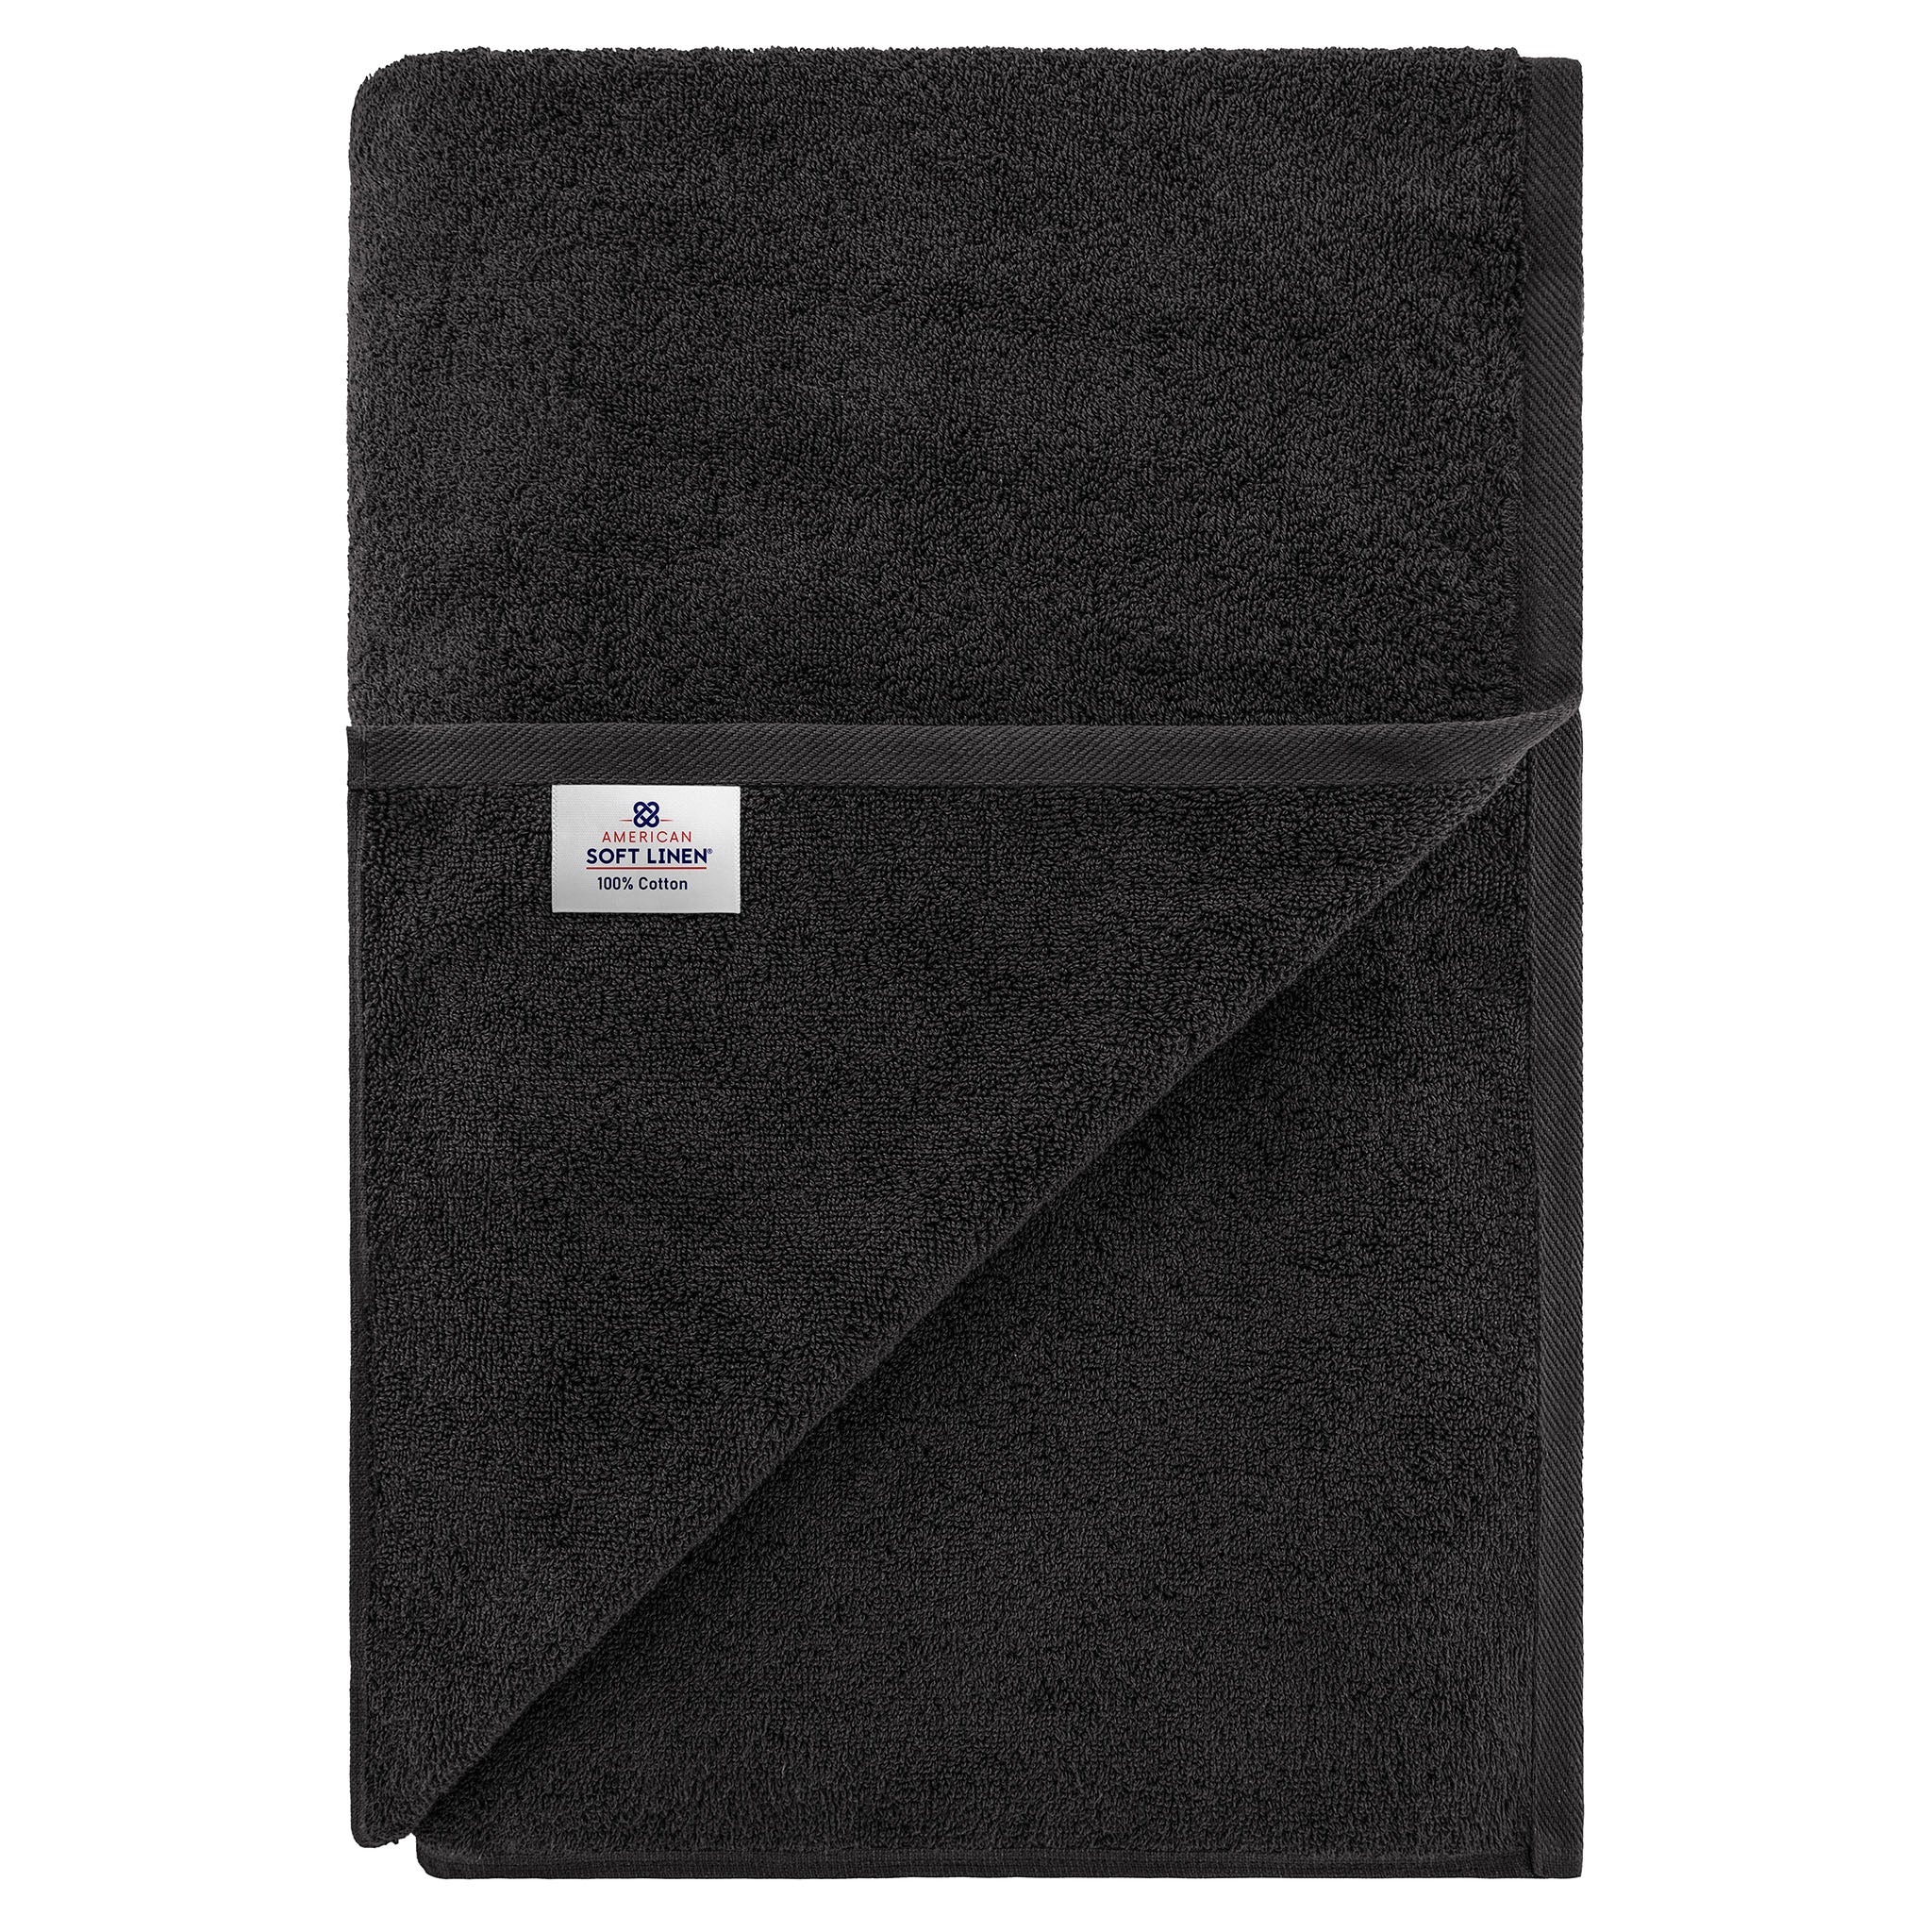 American Soft Linen 100% Ring Spun Cotton 40x80 Inches Oversized Bath Sheets black-7